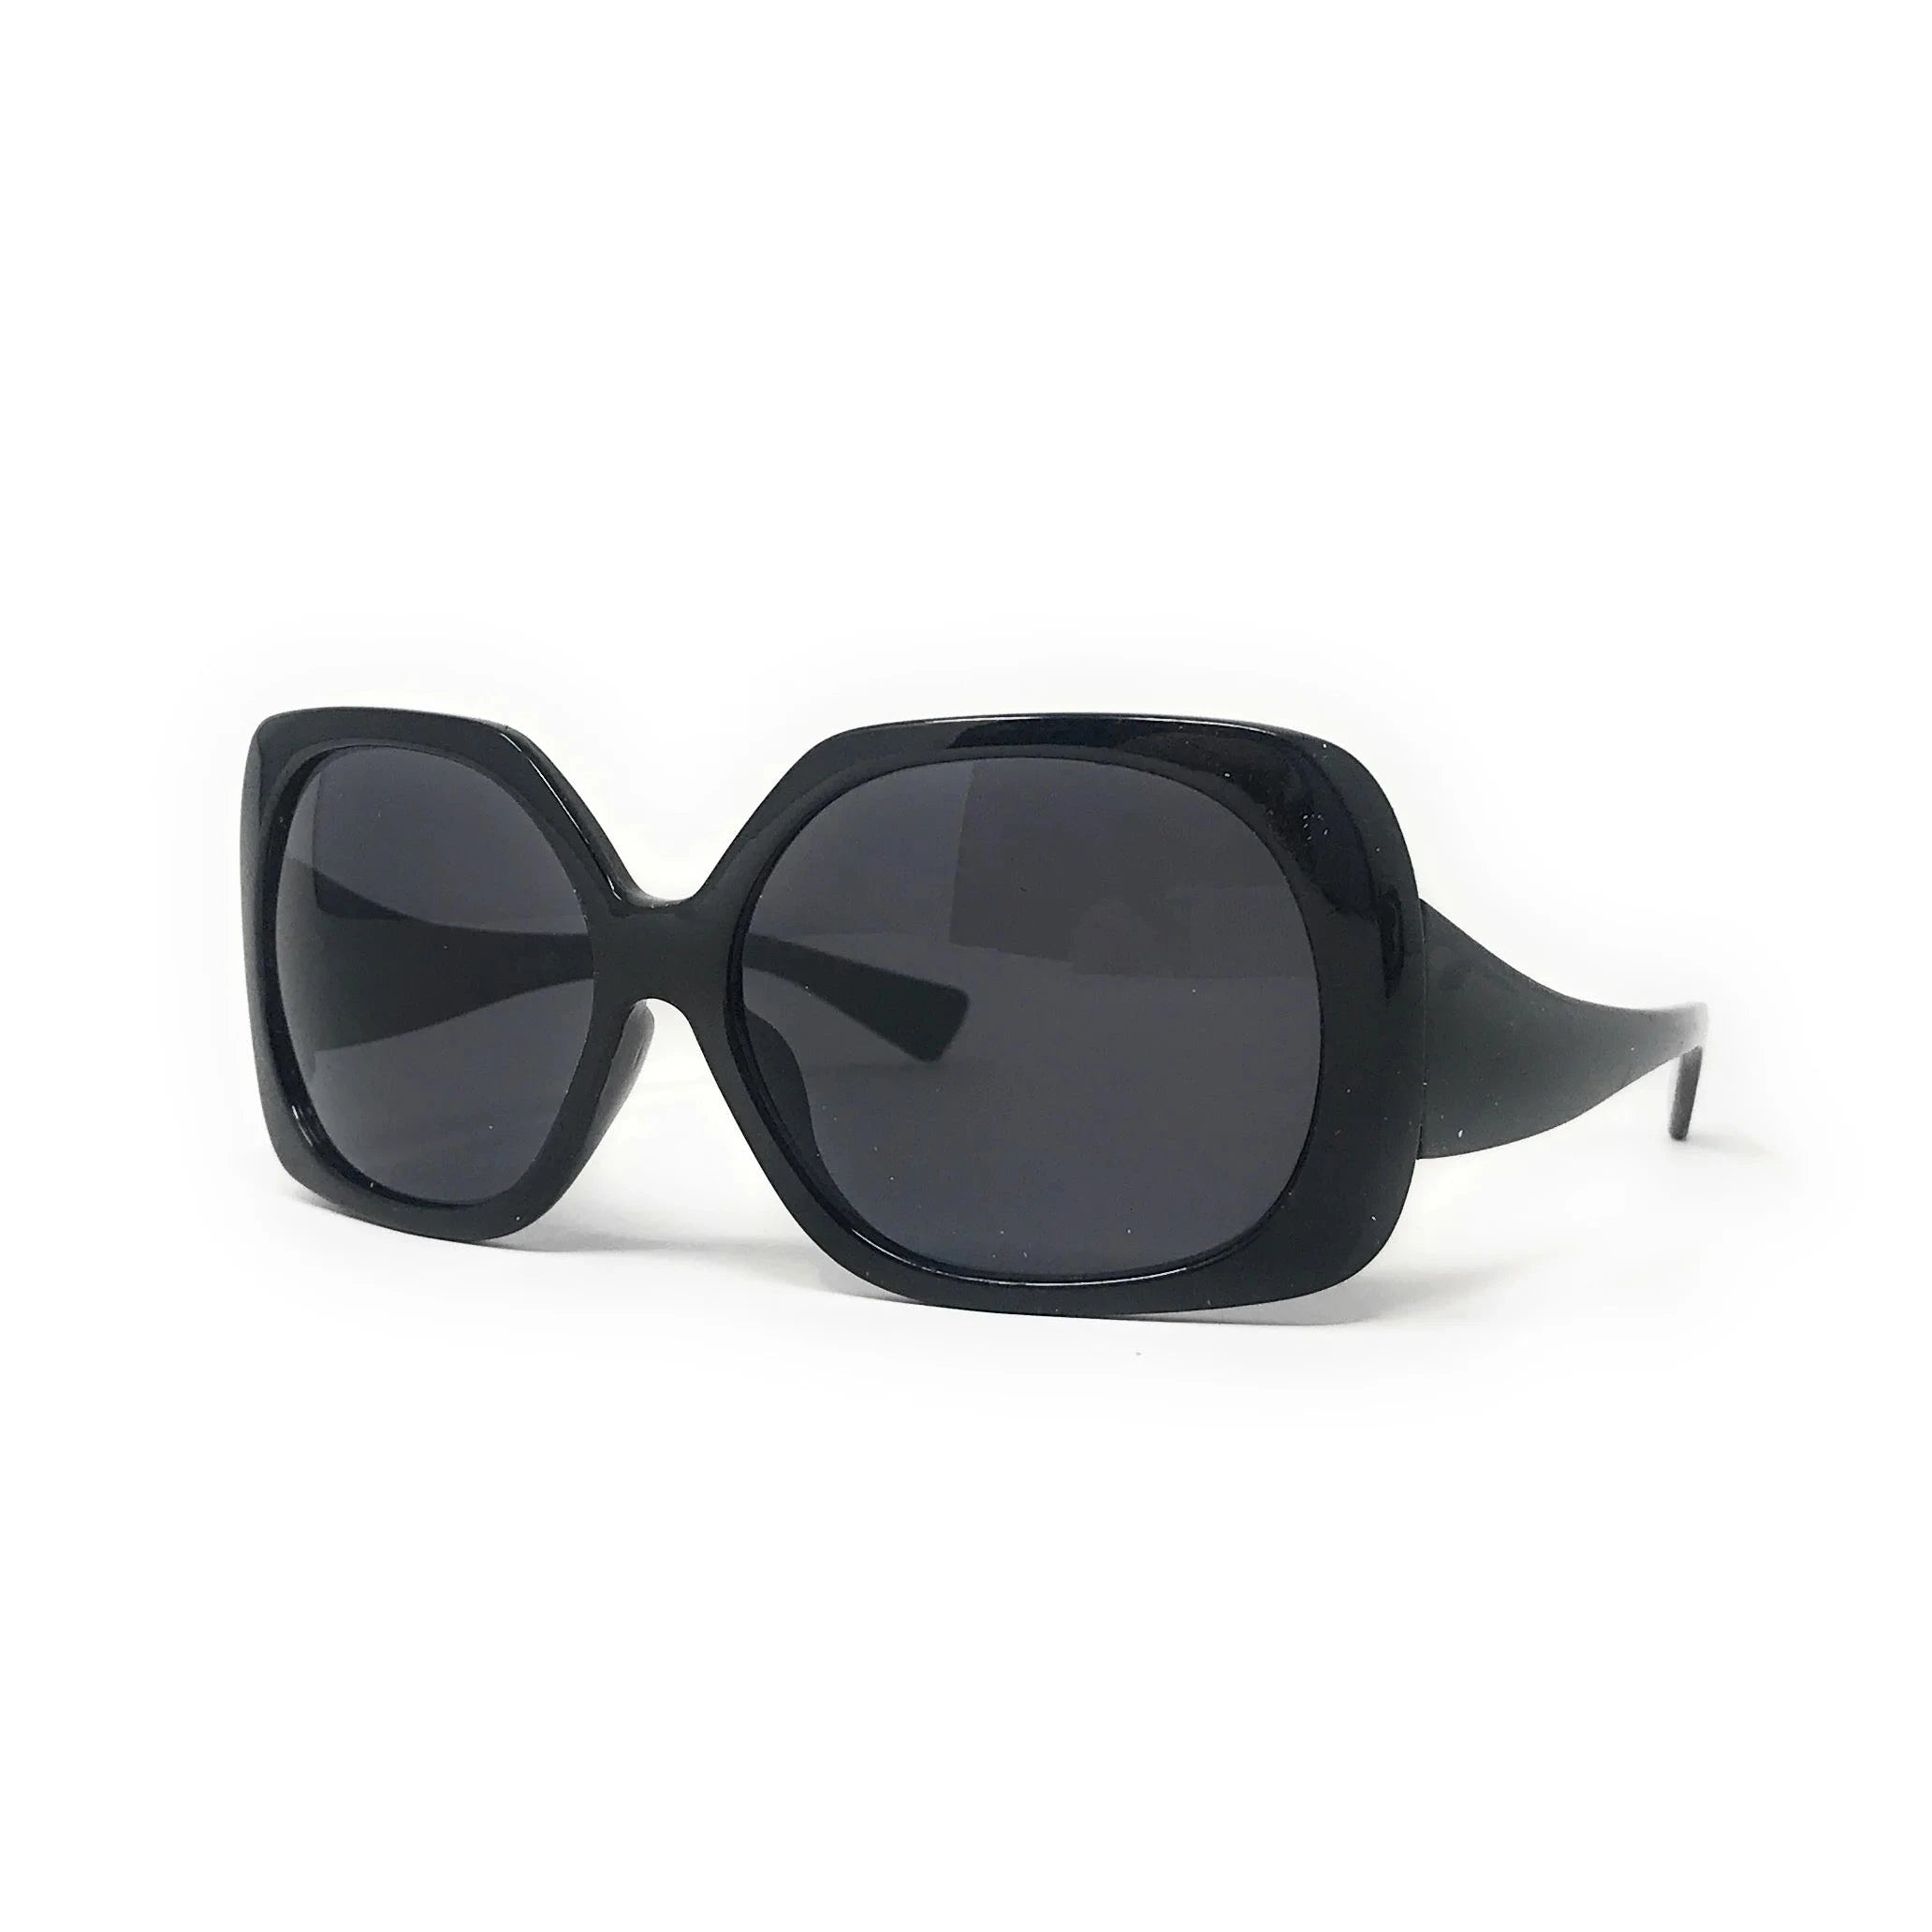 Black Modette Vintage Inspired Sunglasses